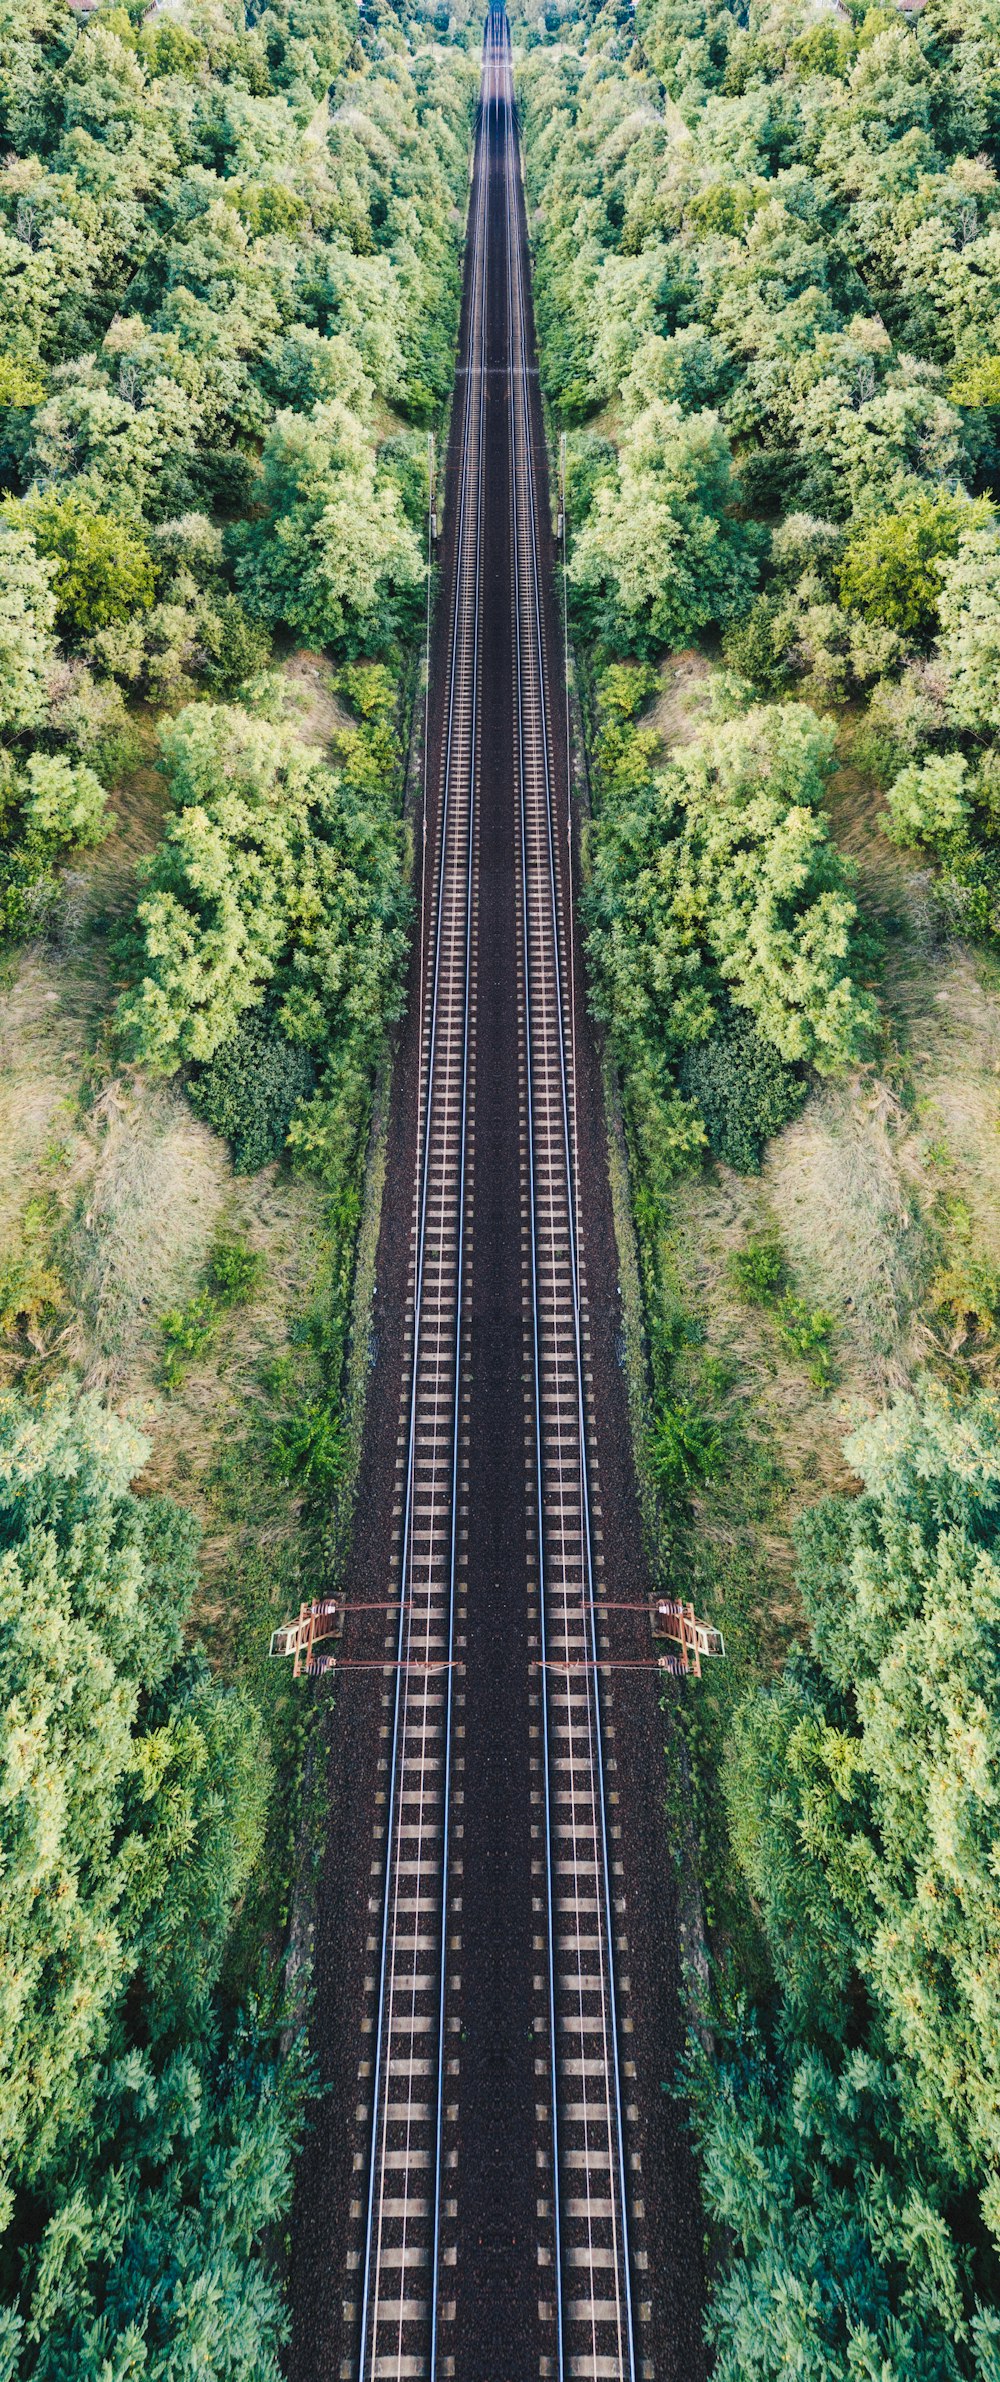 train railway near trees during daytime